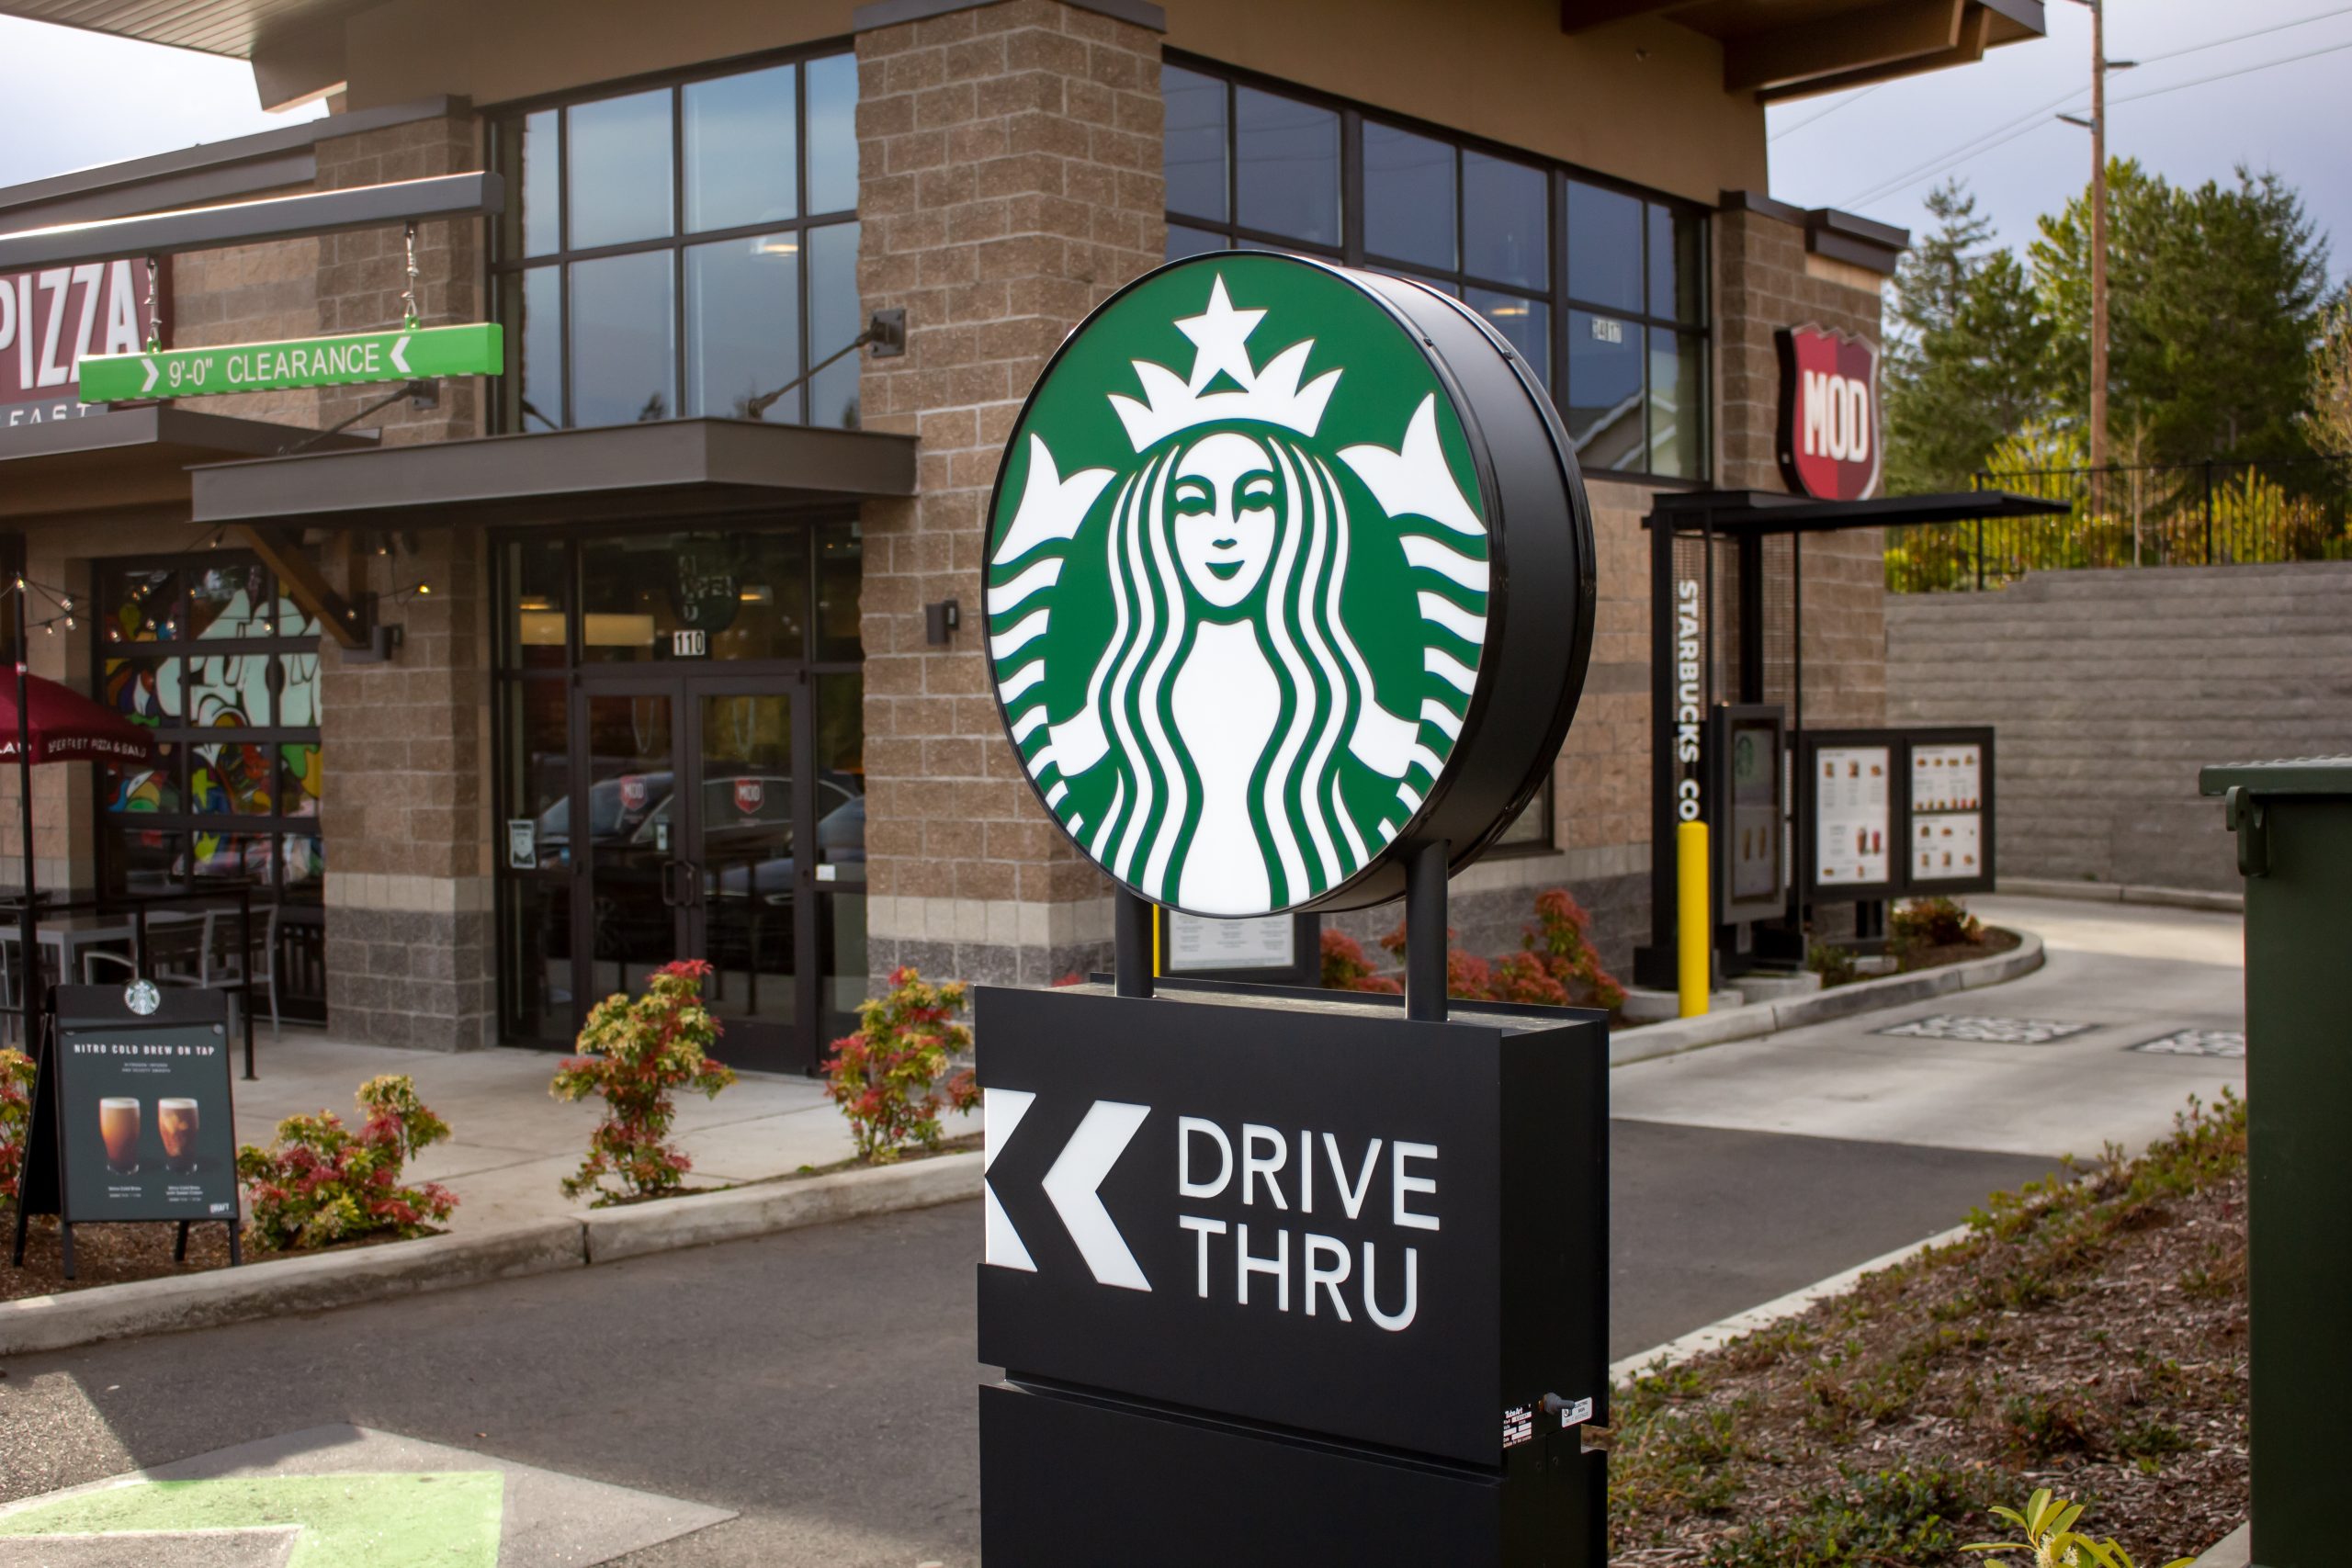 Three new Starbucks takes NI outlets to 26